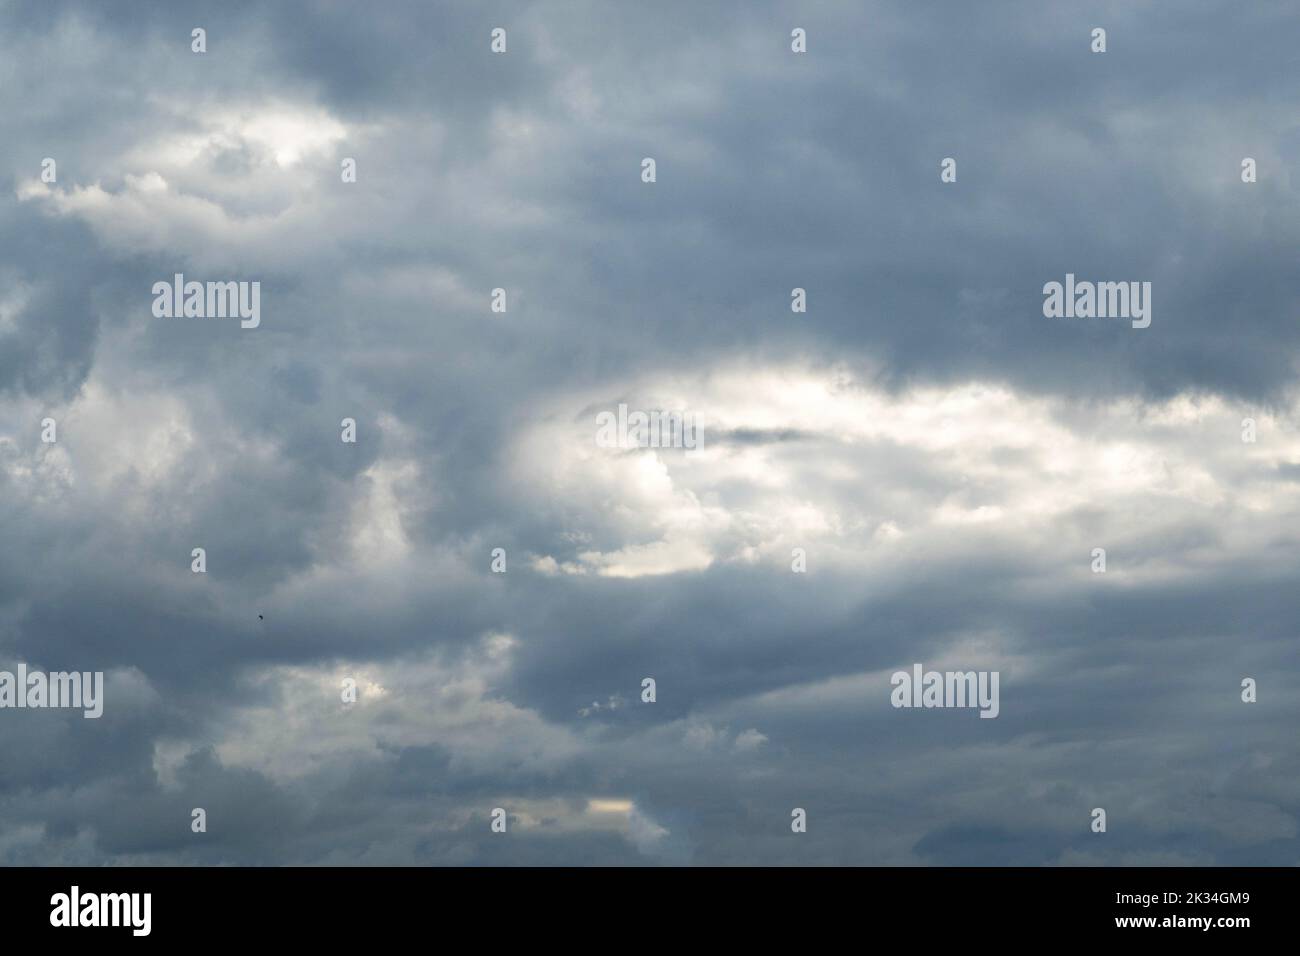 Cumulus nimbus clouds with the sun peeking through Stock Photo